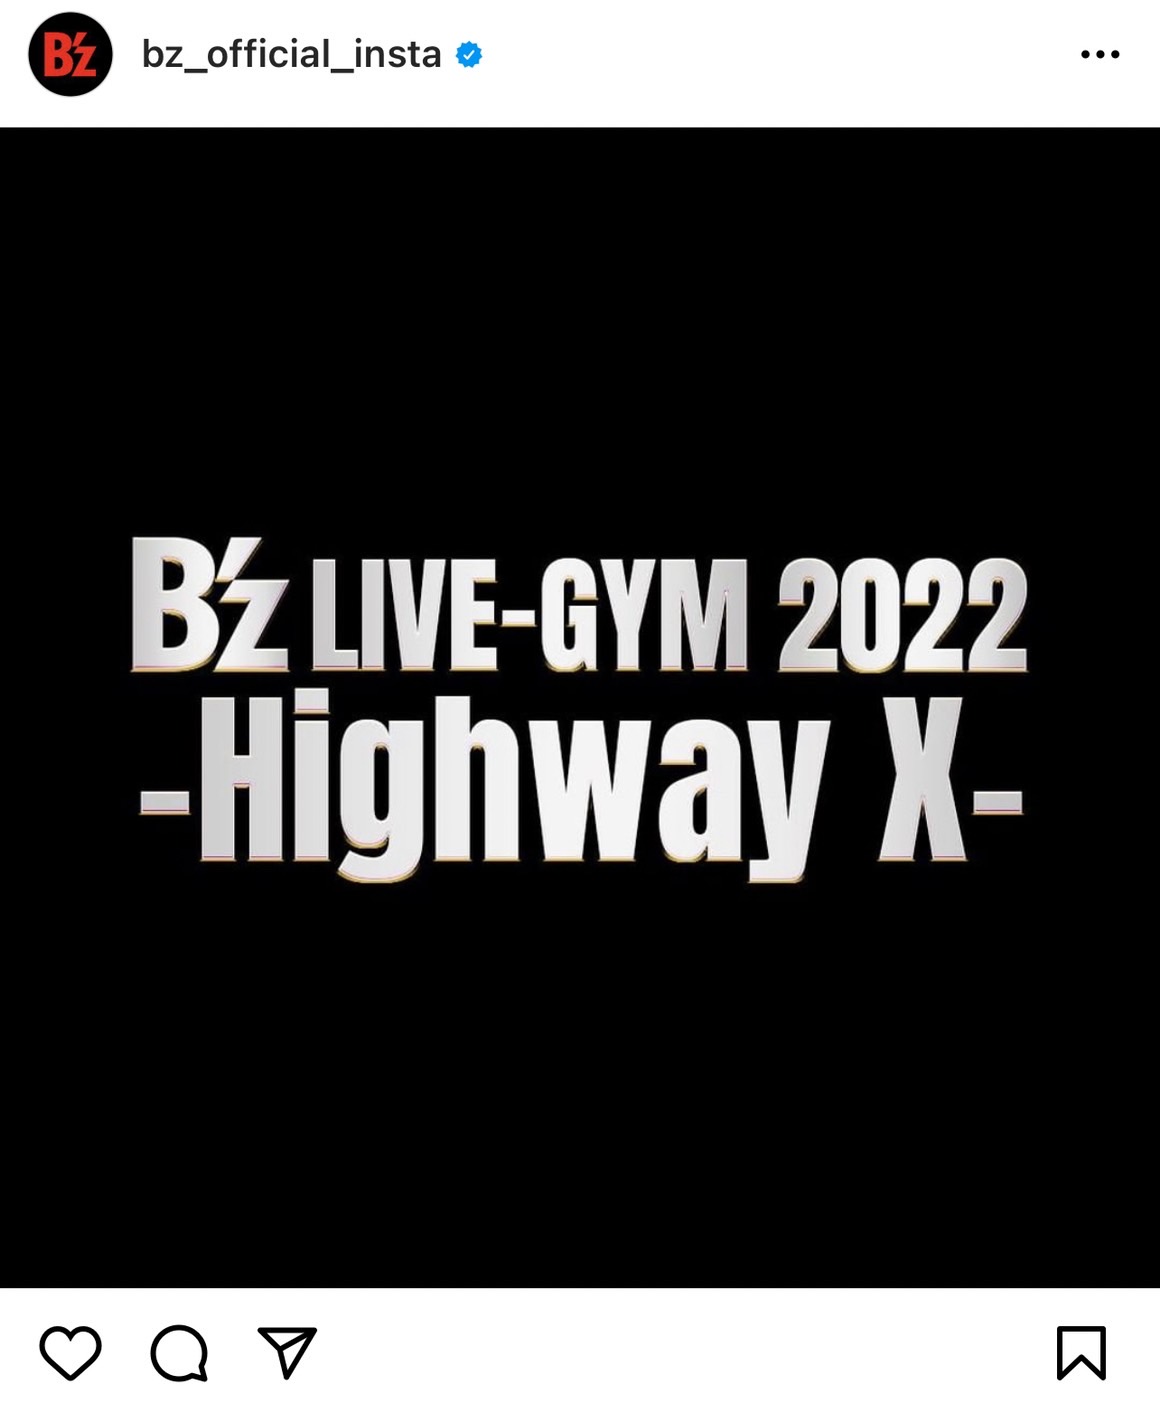 『B'z LIVE-GYM 2022 -Highway X-』のツアーロゴ